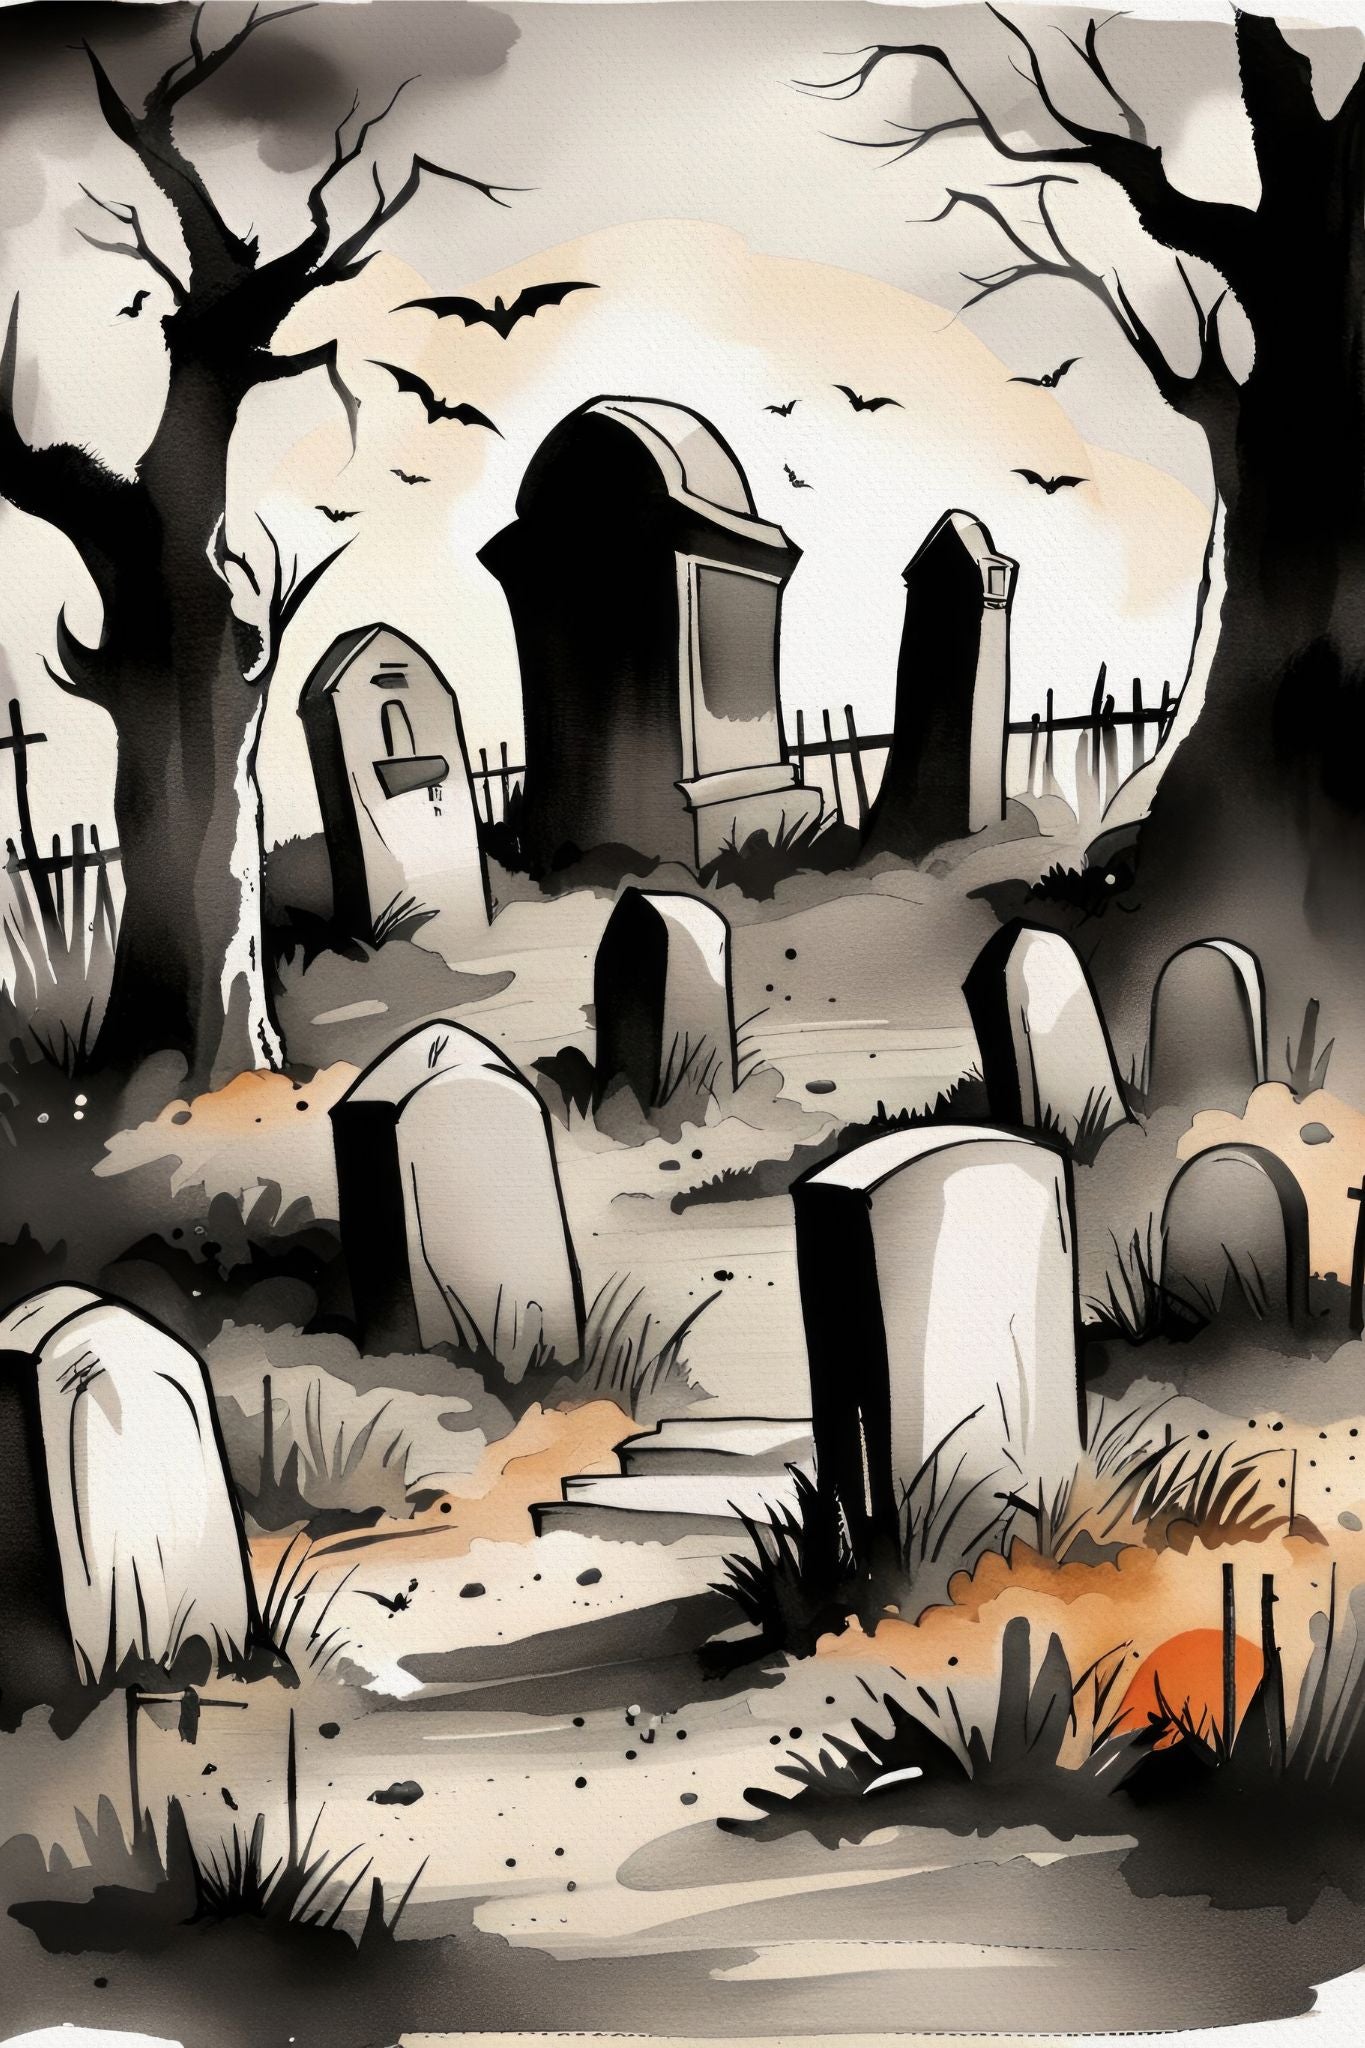 Creepy og kult halloweenkort. Motiv er i cartoon og forestiller en kirkegård